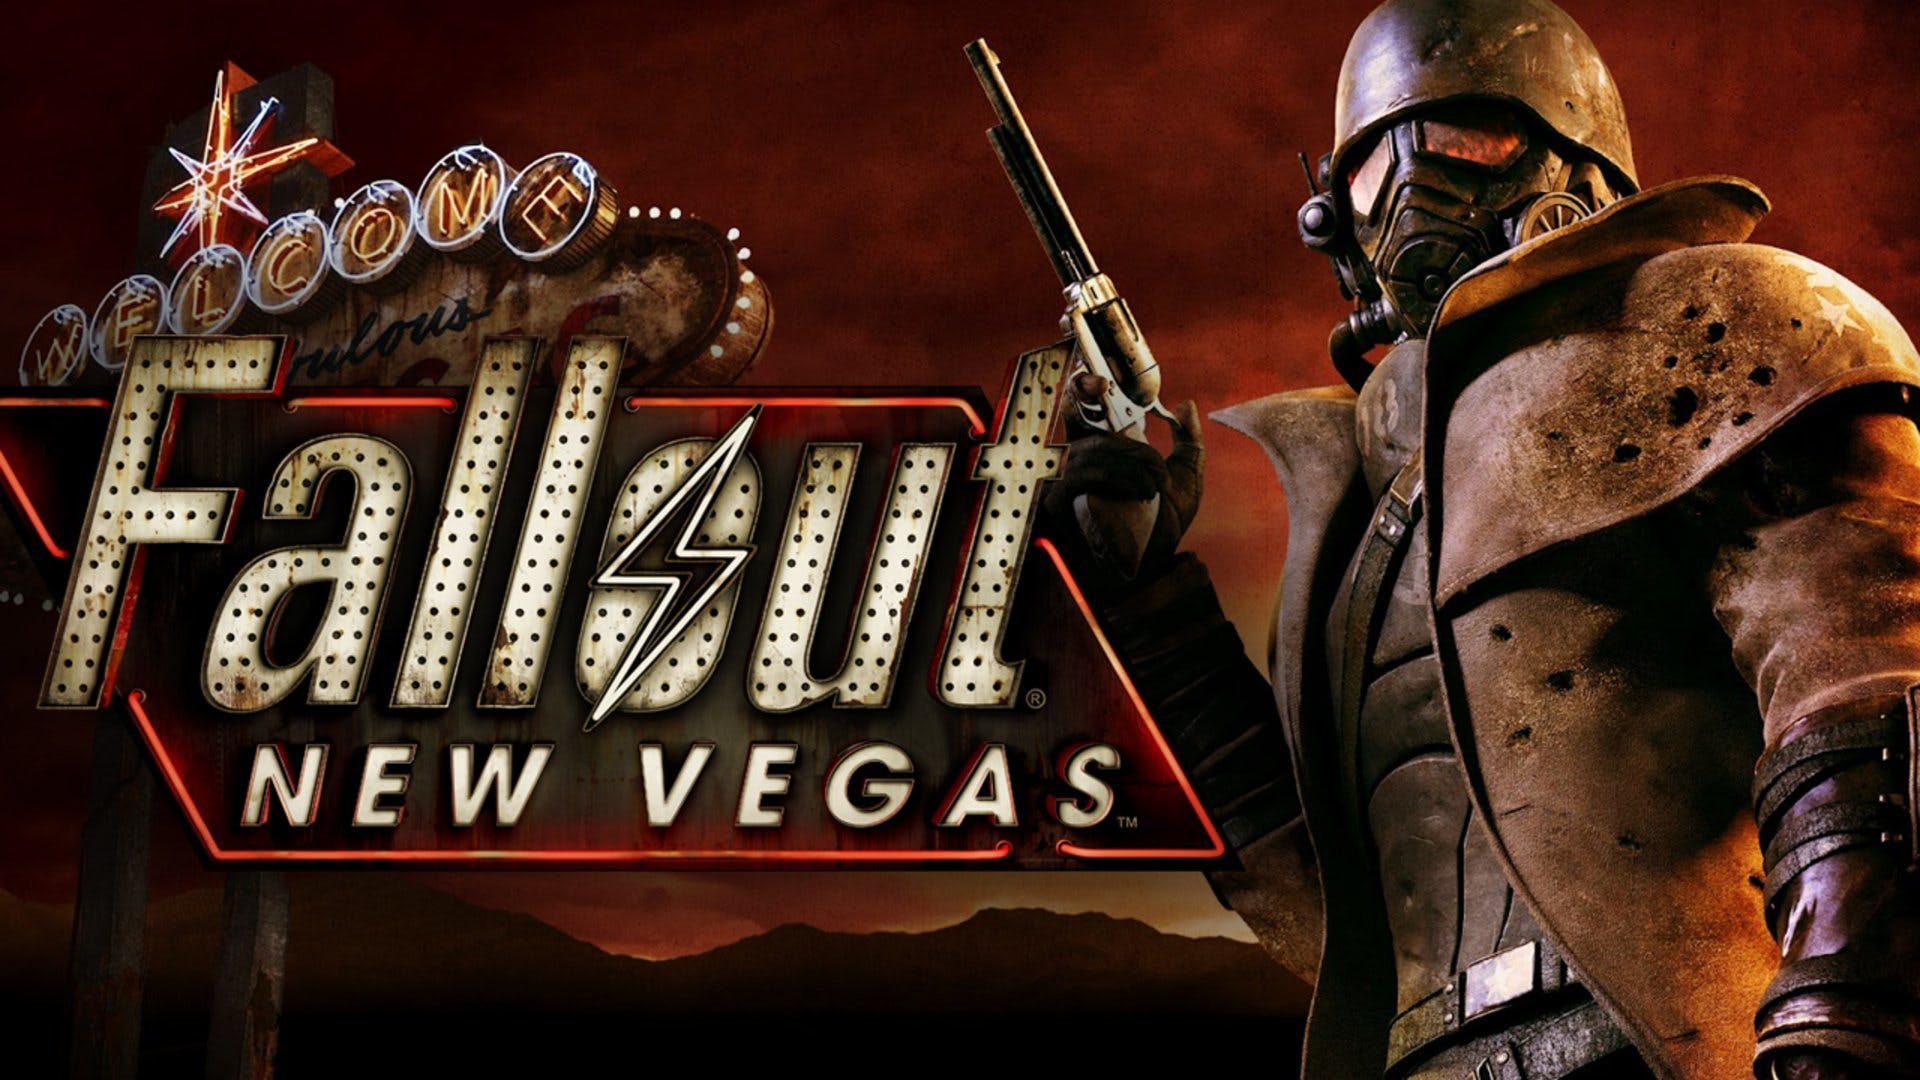 Fallout New Vegas - Ultimate Edition (2012) - День 5 (Slow Run)  - Part 2